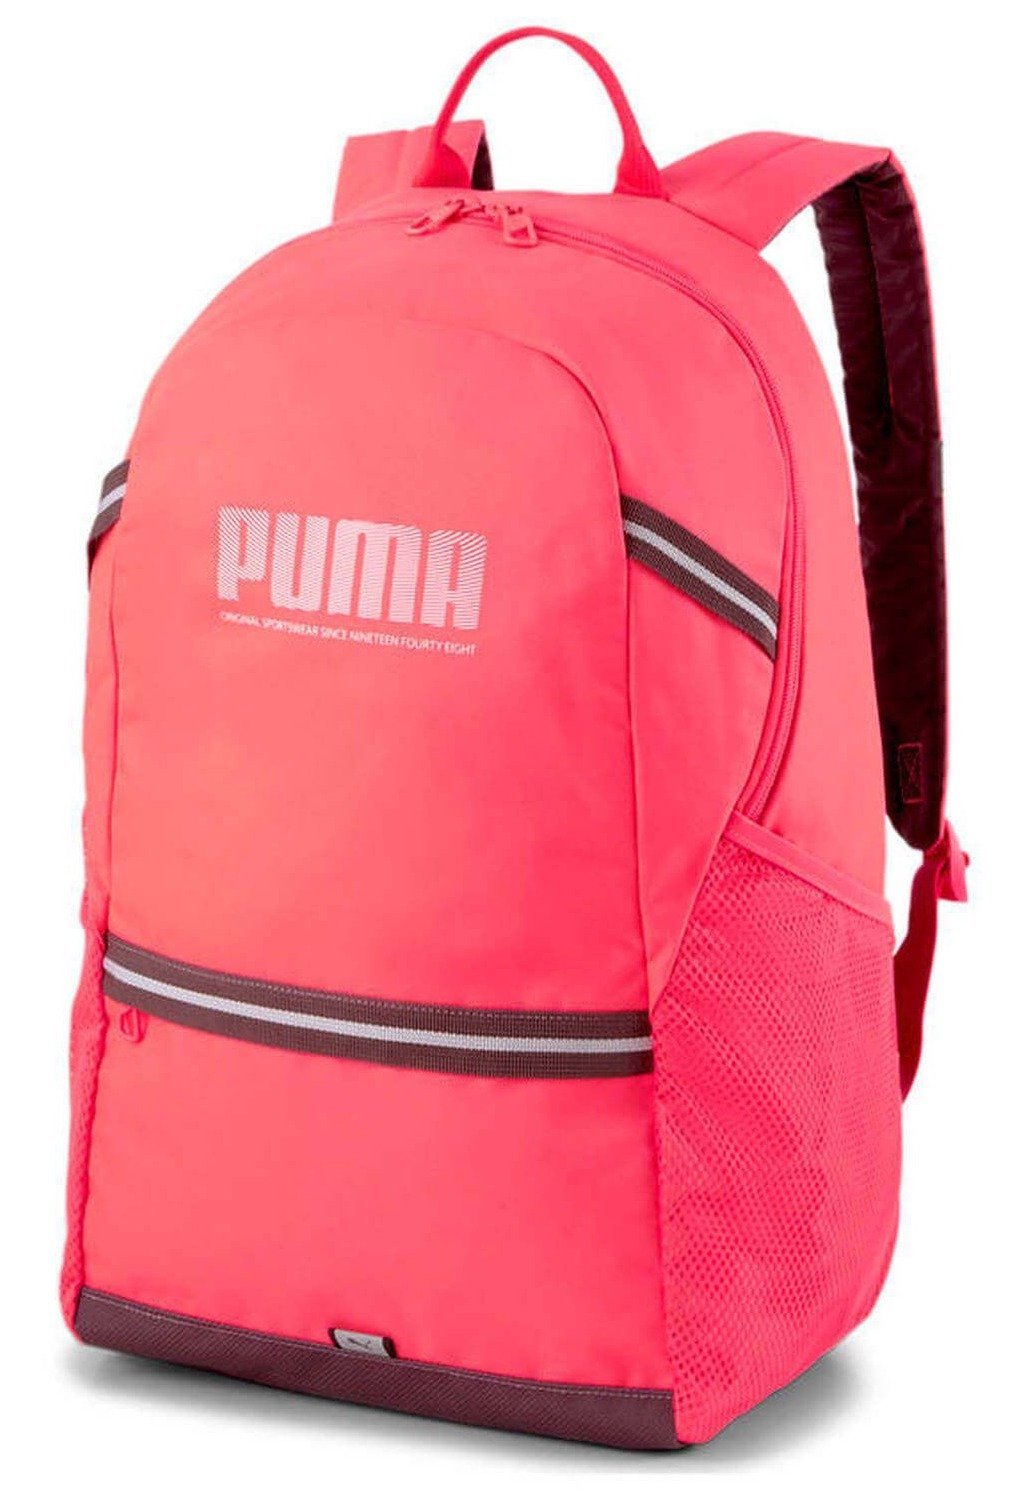 Puma Academy Plus Backpack